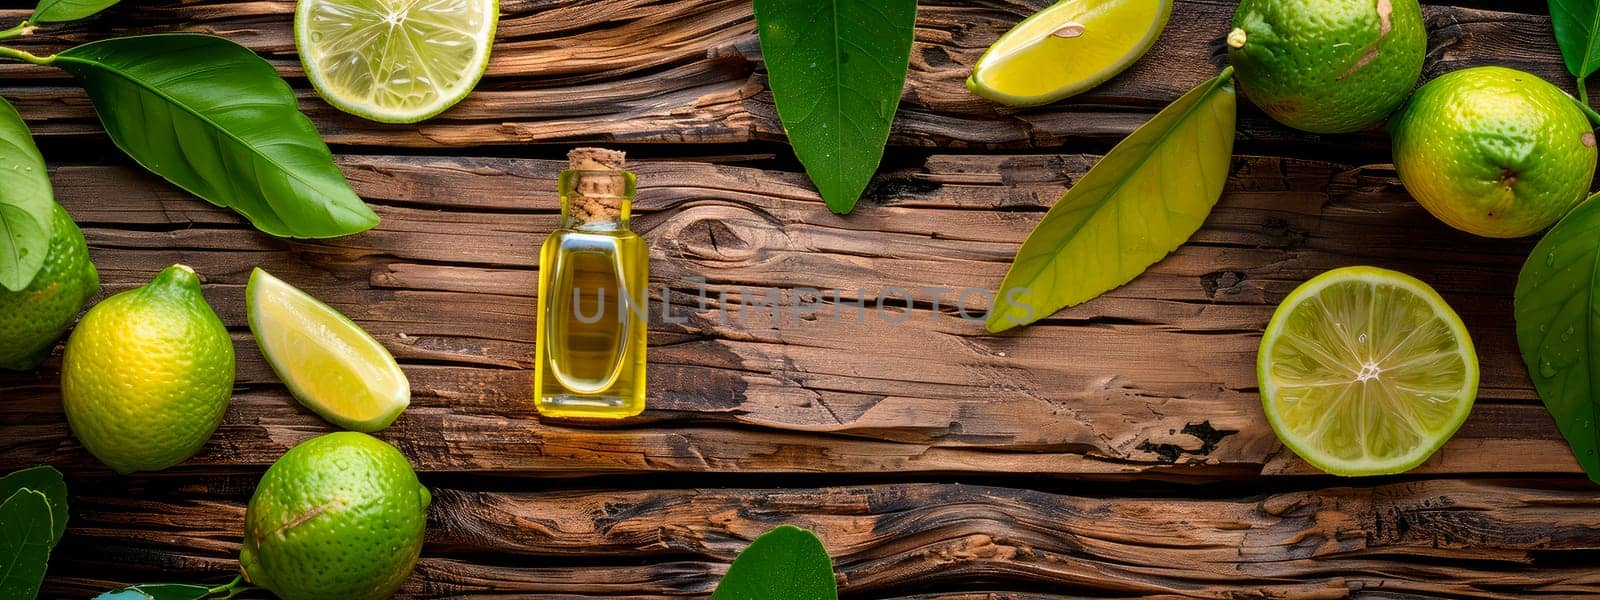 bergamot essential oil in a bottle. Selective focus. by yanadjana